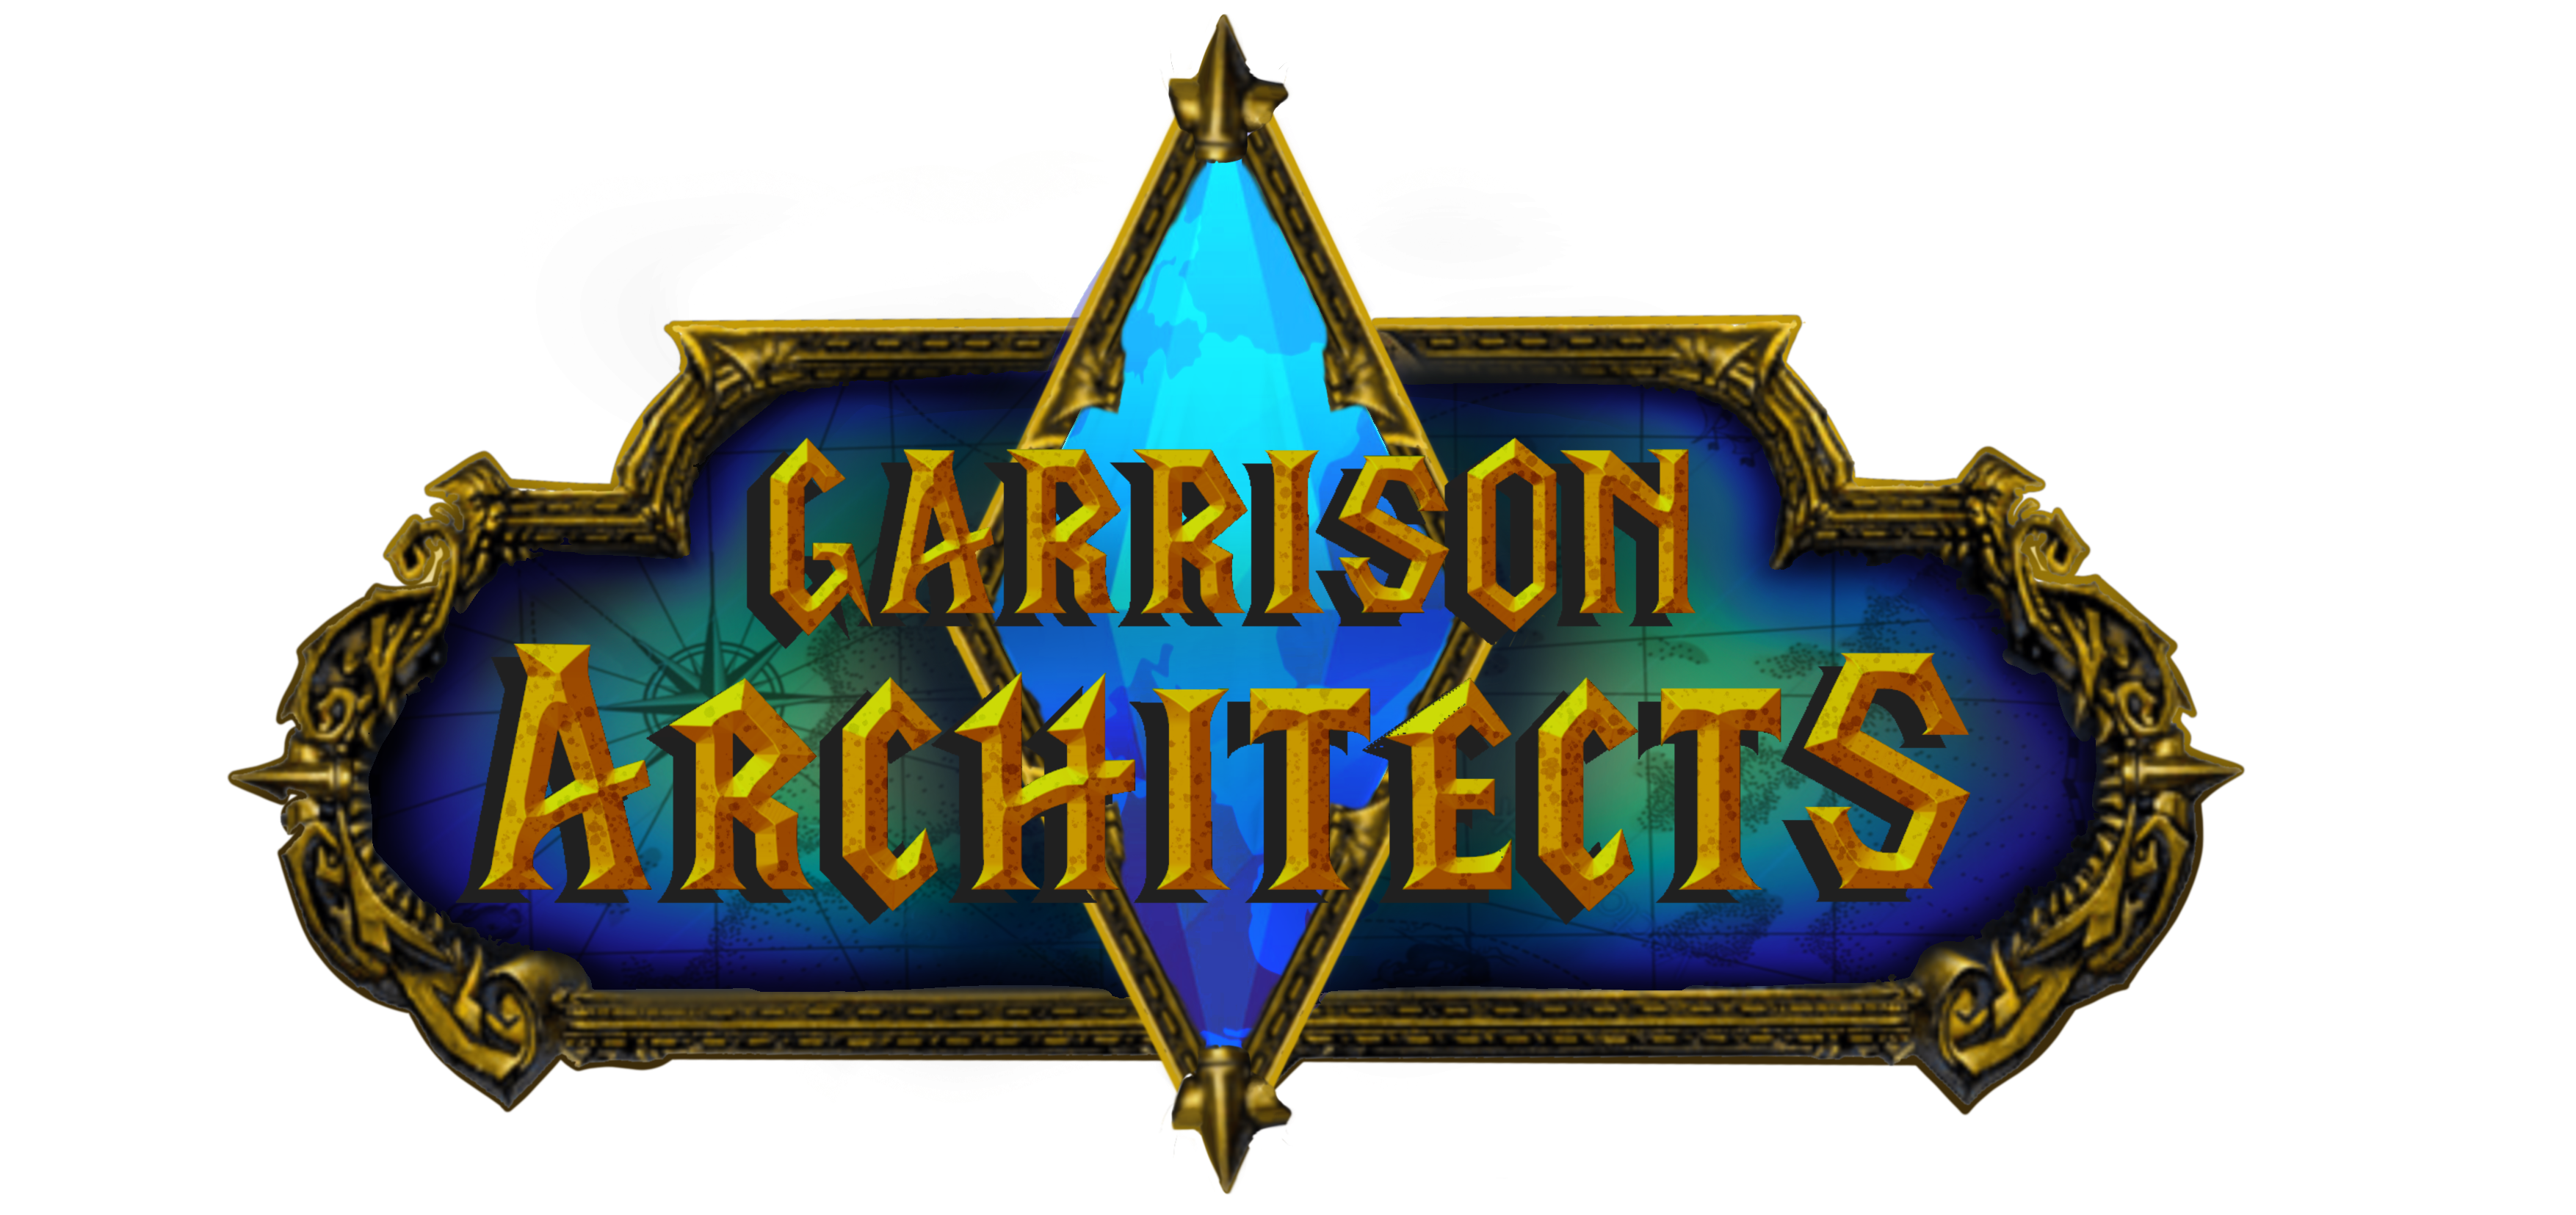 THE GARRISON ARCHITECTS